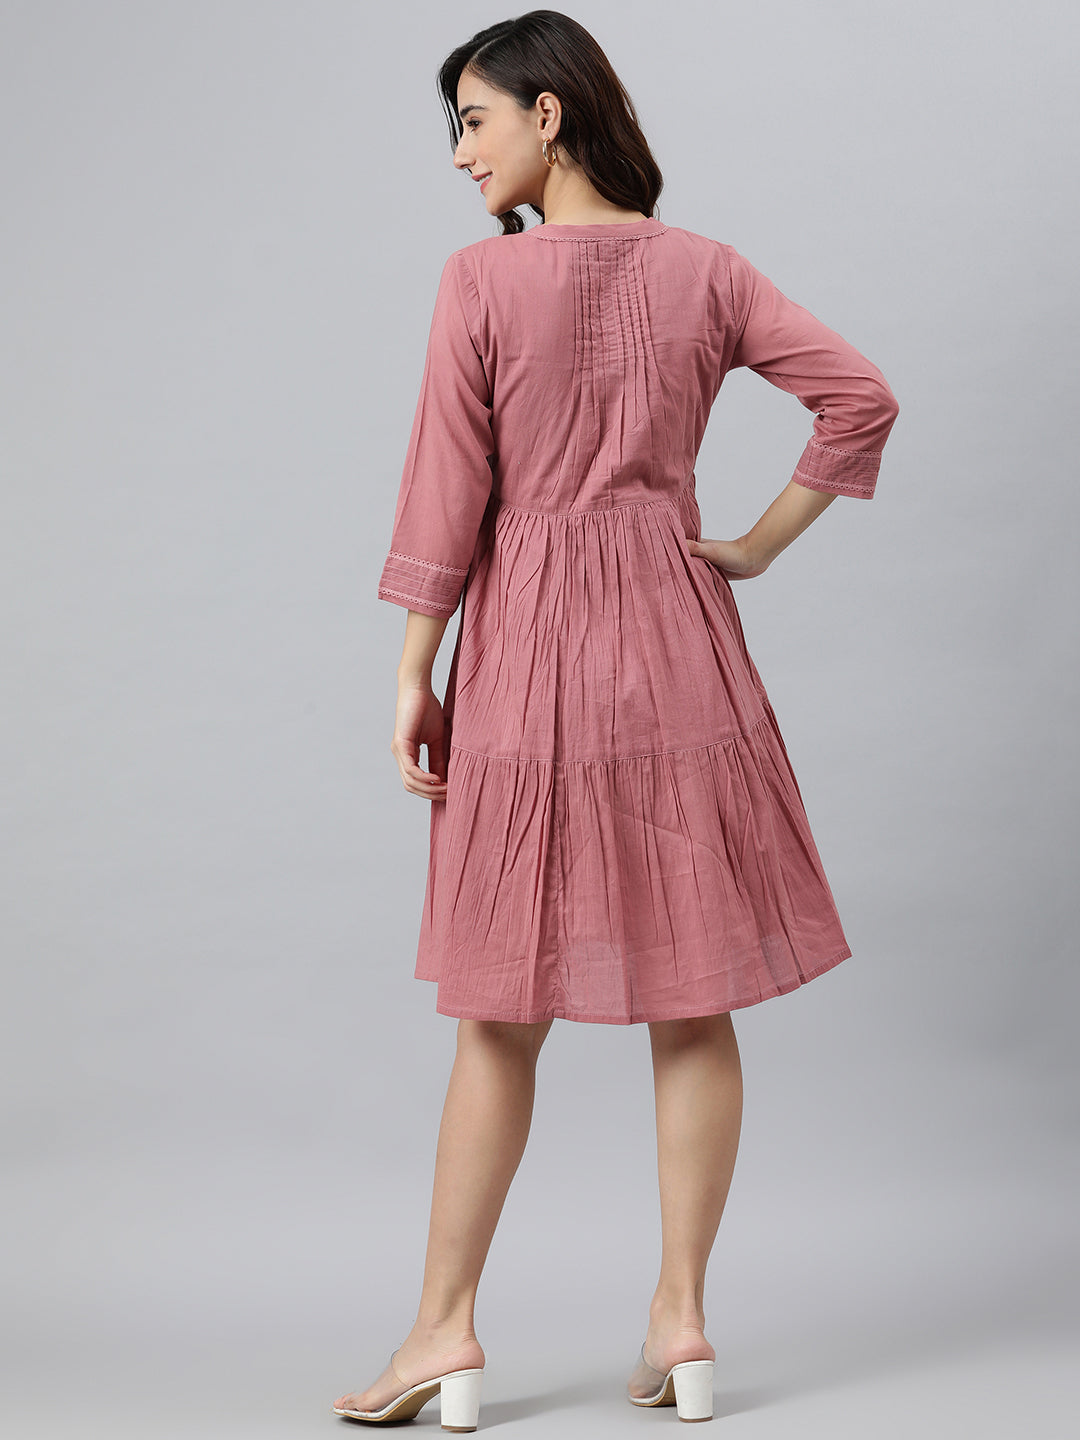 Women's Solid Coral Pink Cotton Dress - Janasya